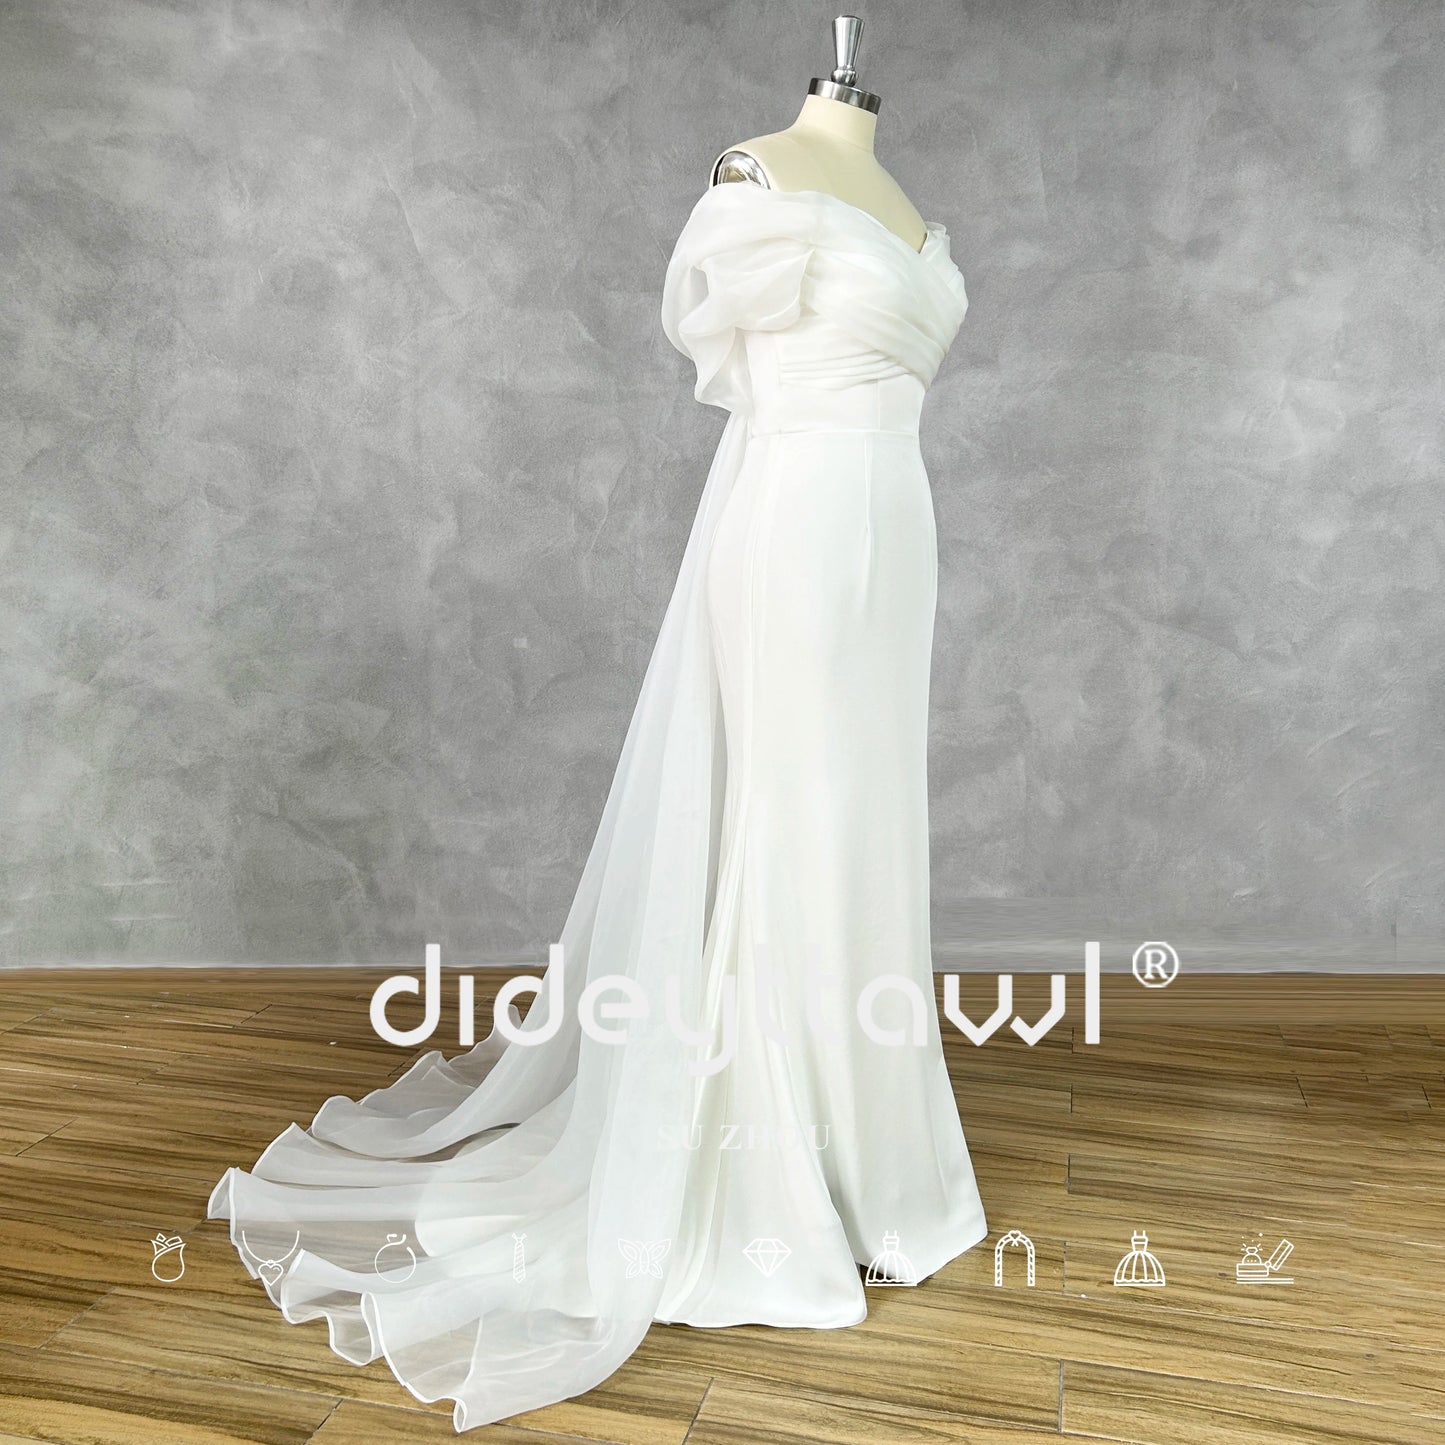 DIDEYTTAWL Real Picture Simple Off-Shoulder Pleats Mermaid Wedding Dress Zipper Back Organza Court Train Train Bridal Gown